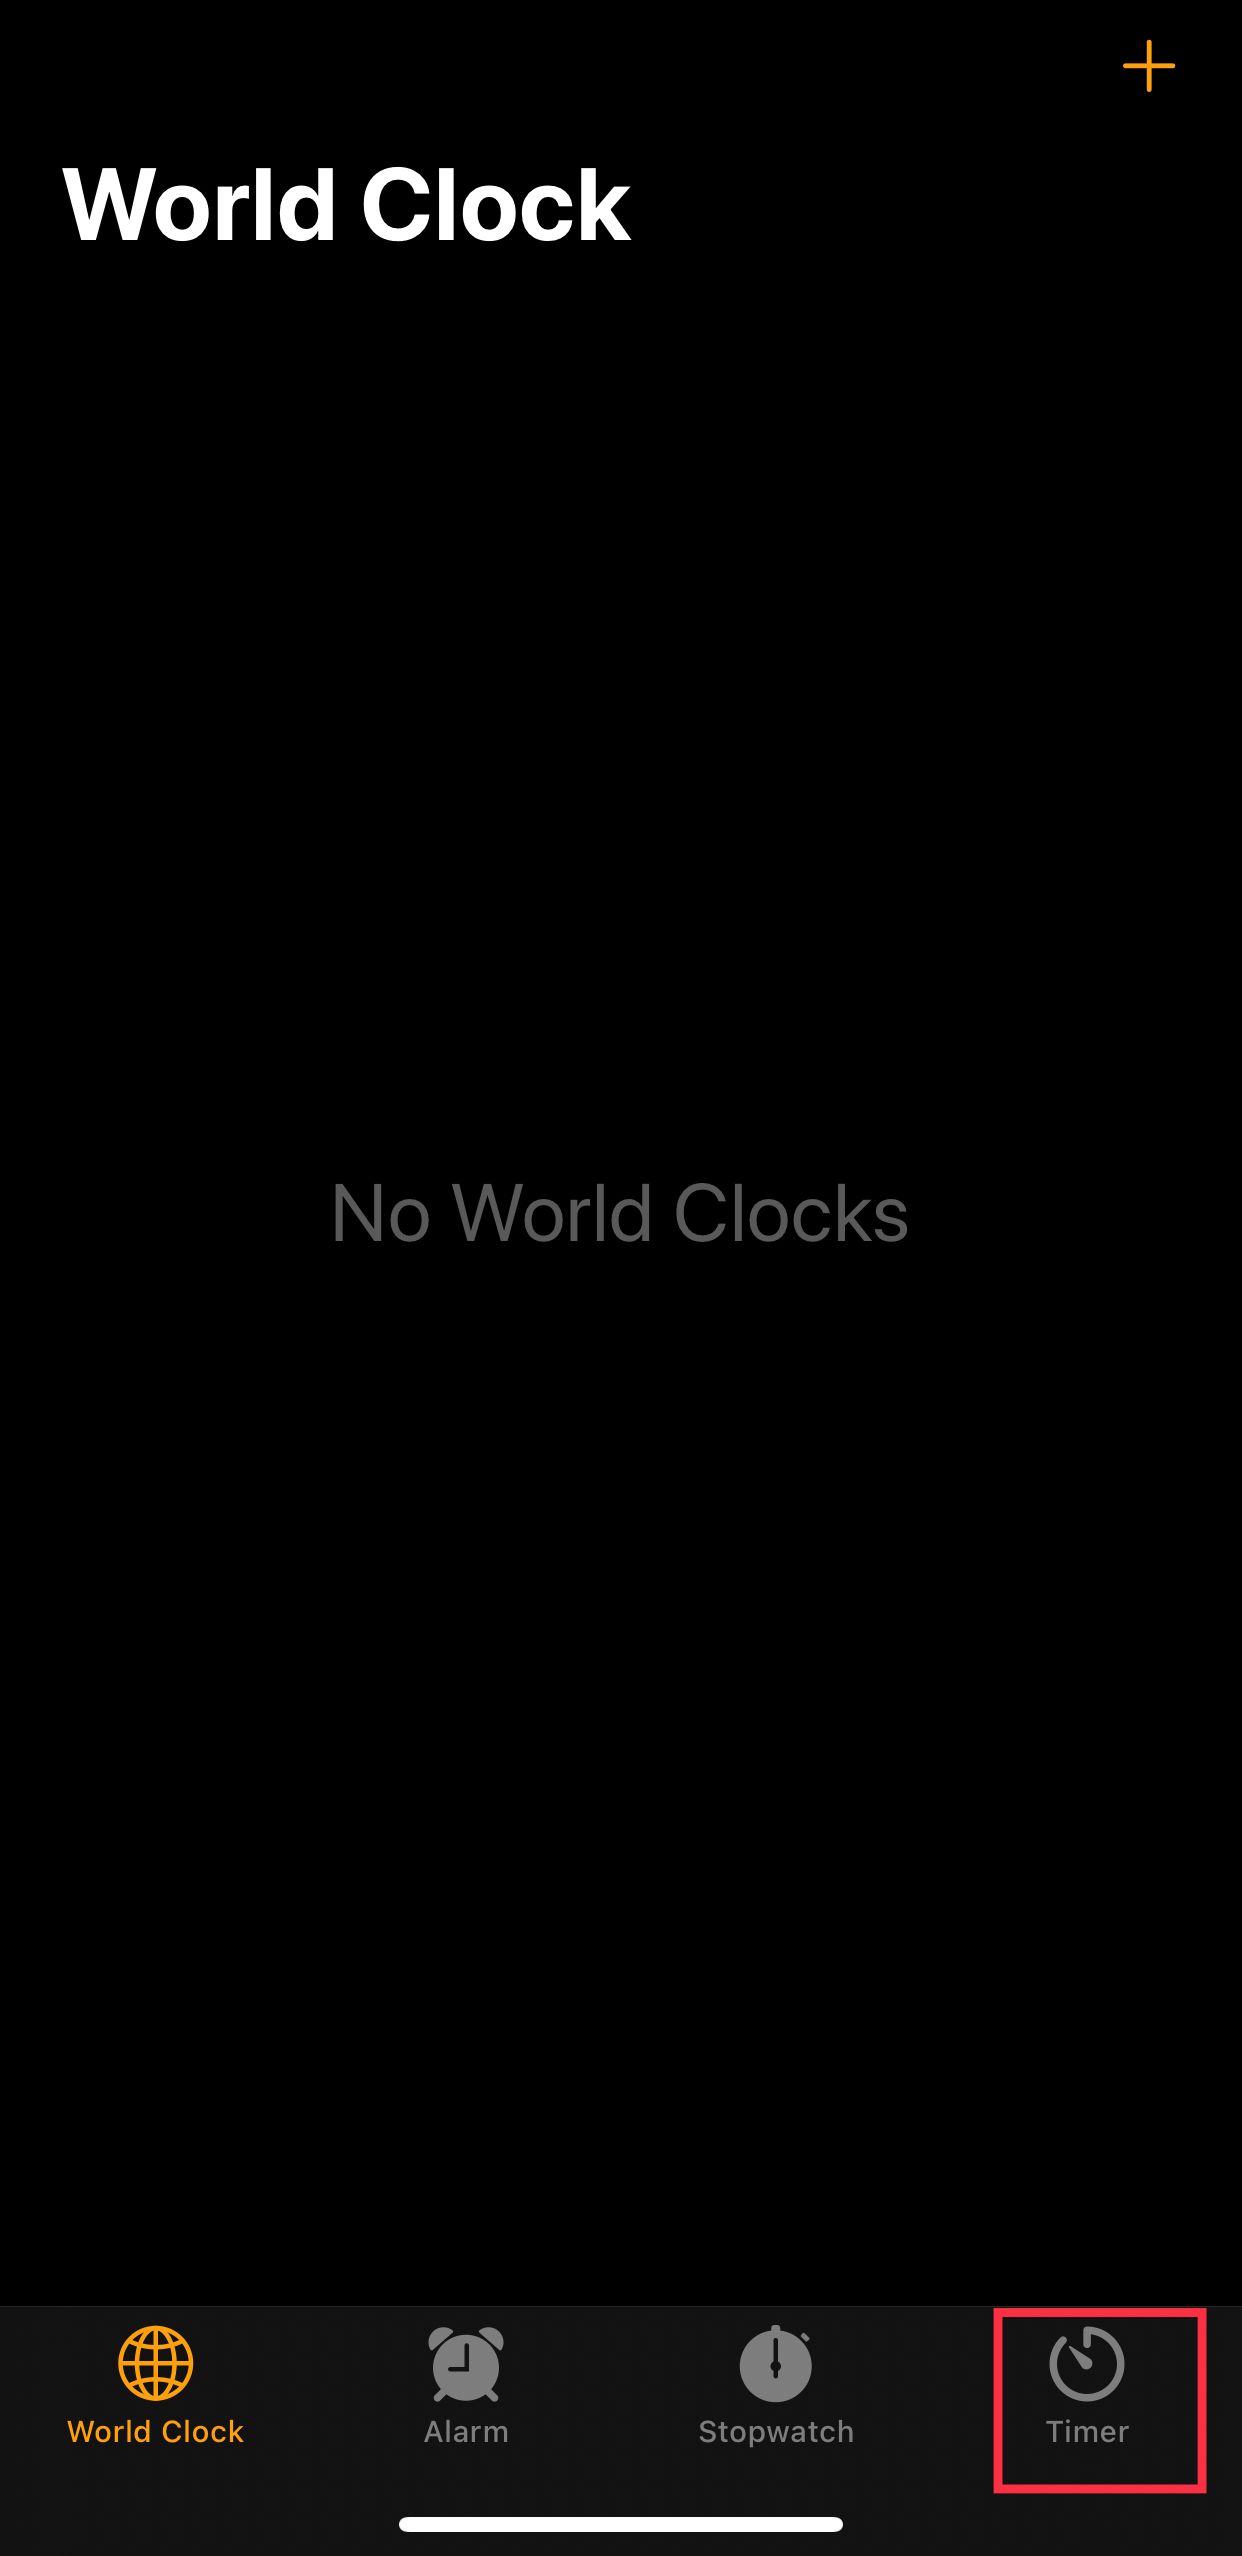 mac sleep timer for youtube